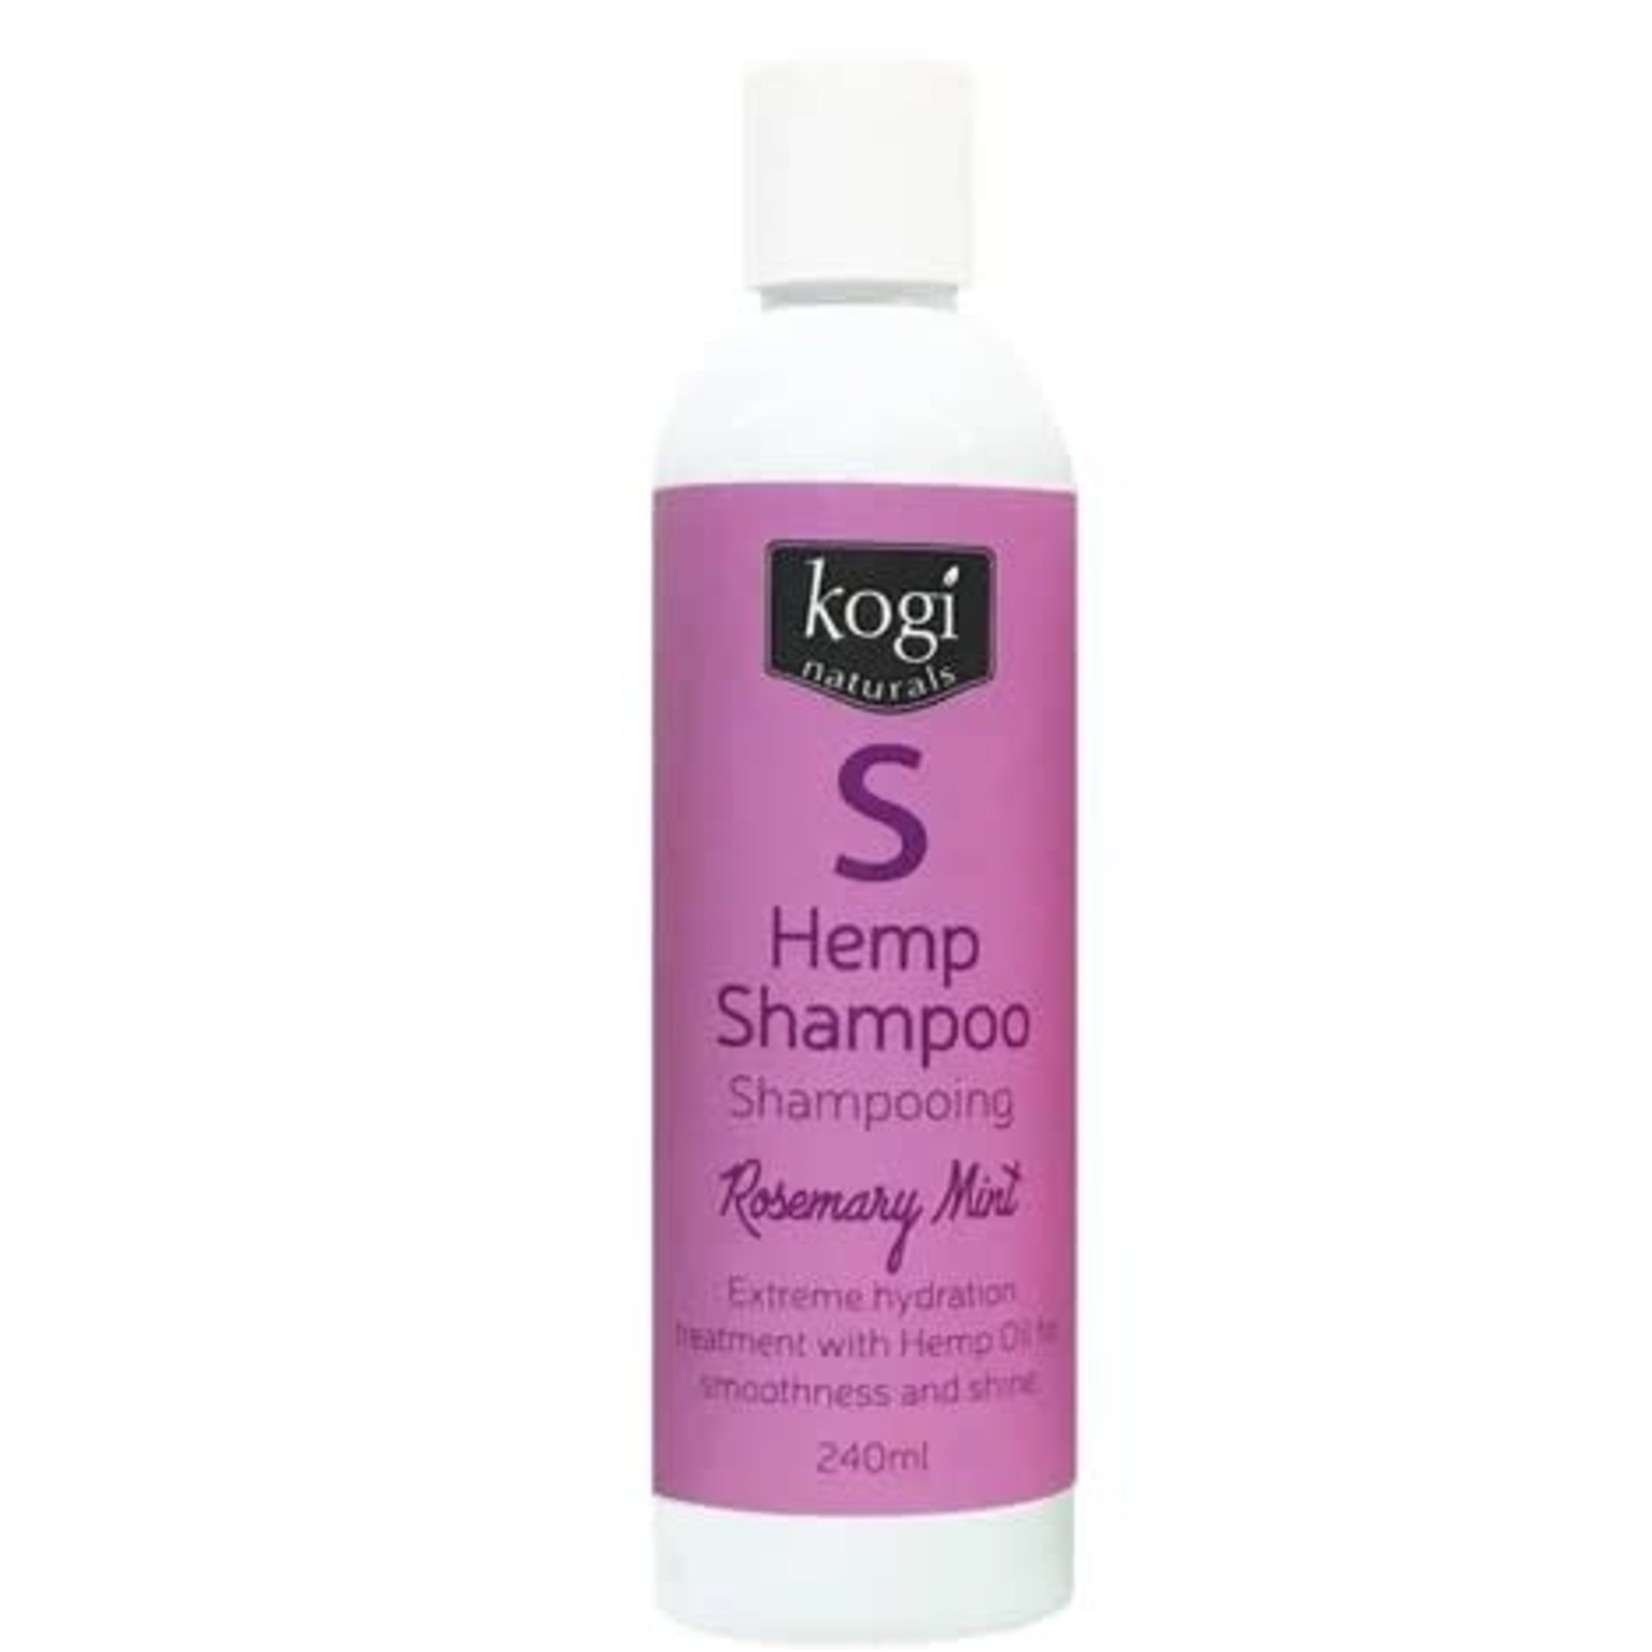 Kogi Naturals Hair Care 475mL